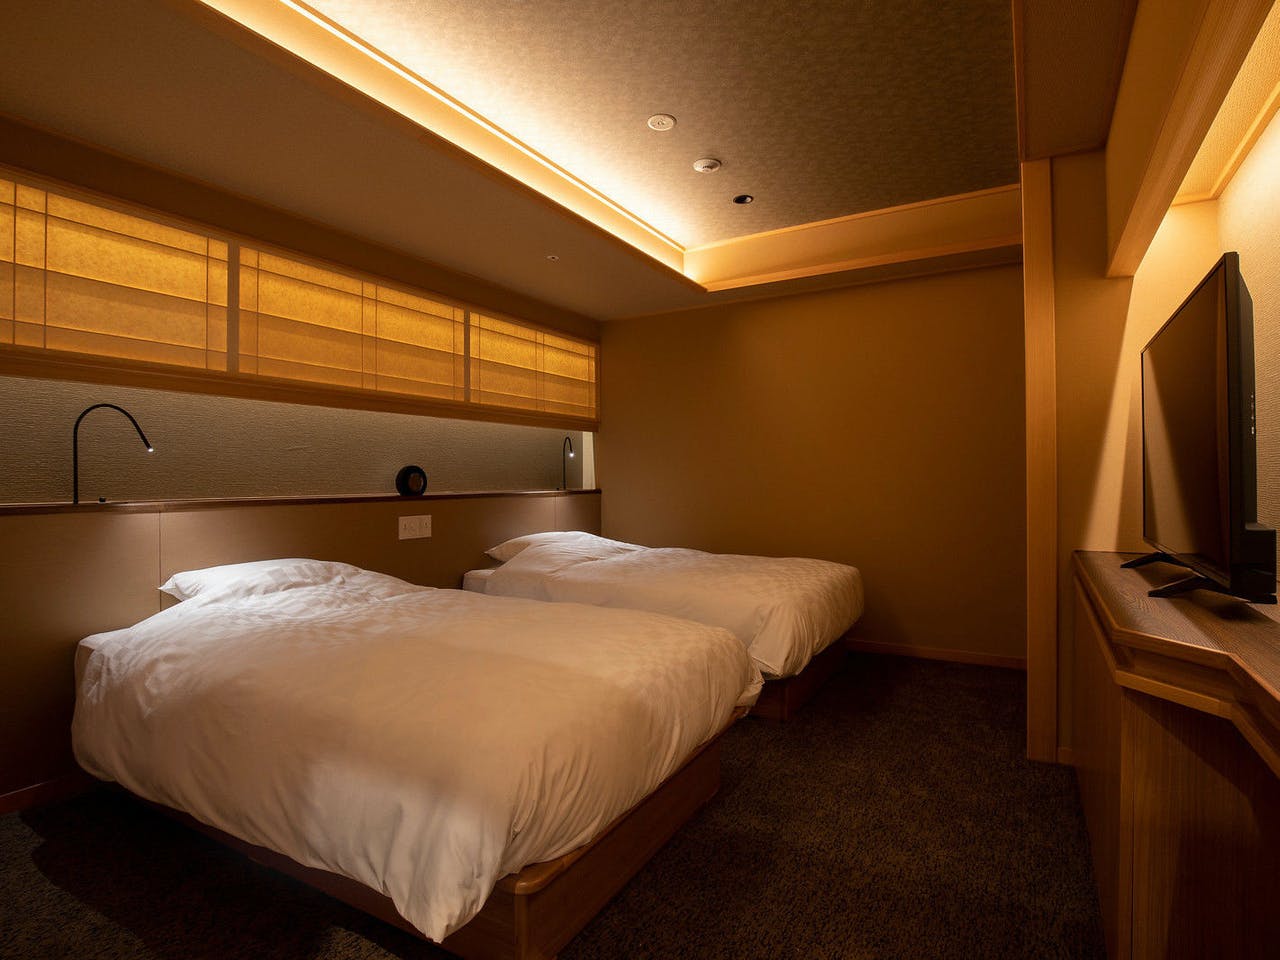 Kobe Room Bed ห้องพัก